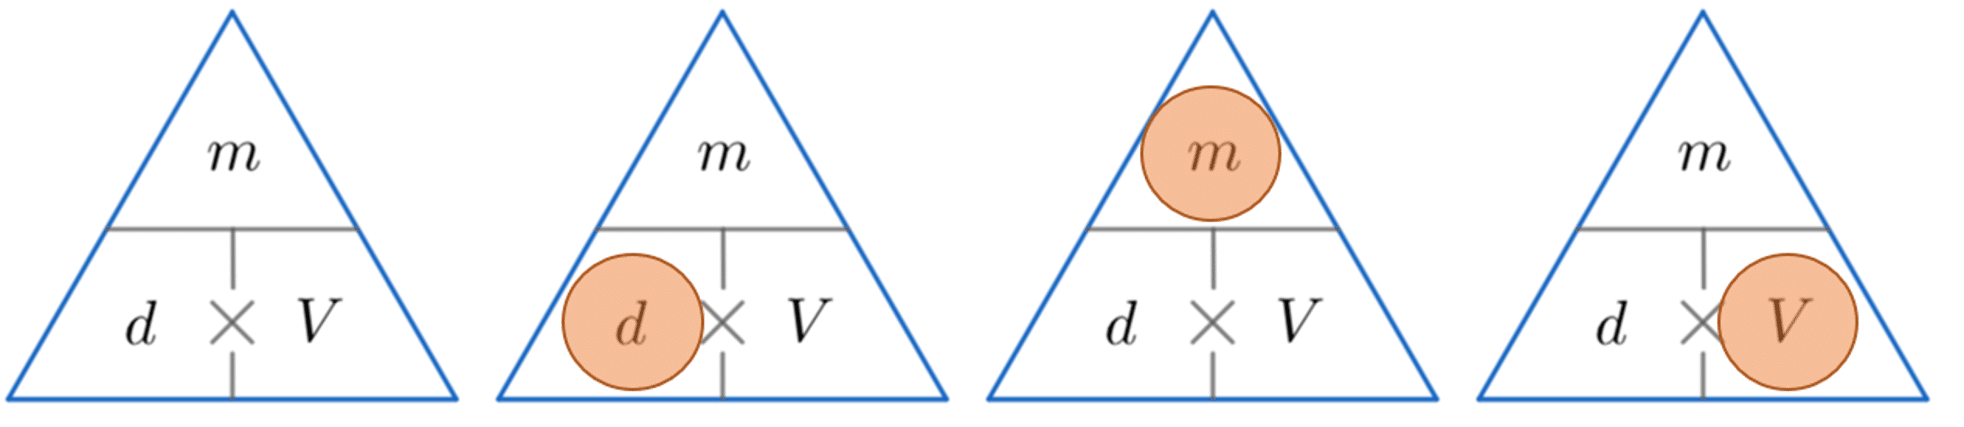 Density Mass Volume Formula Pyramid